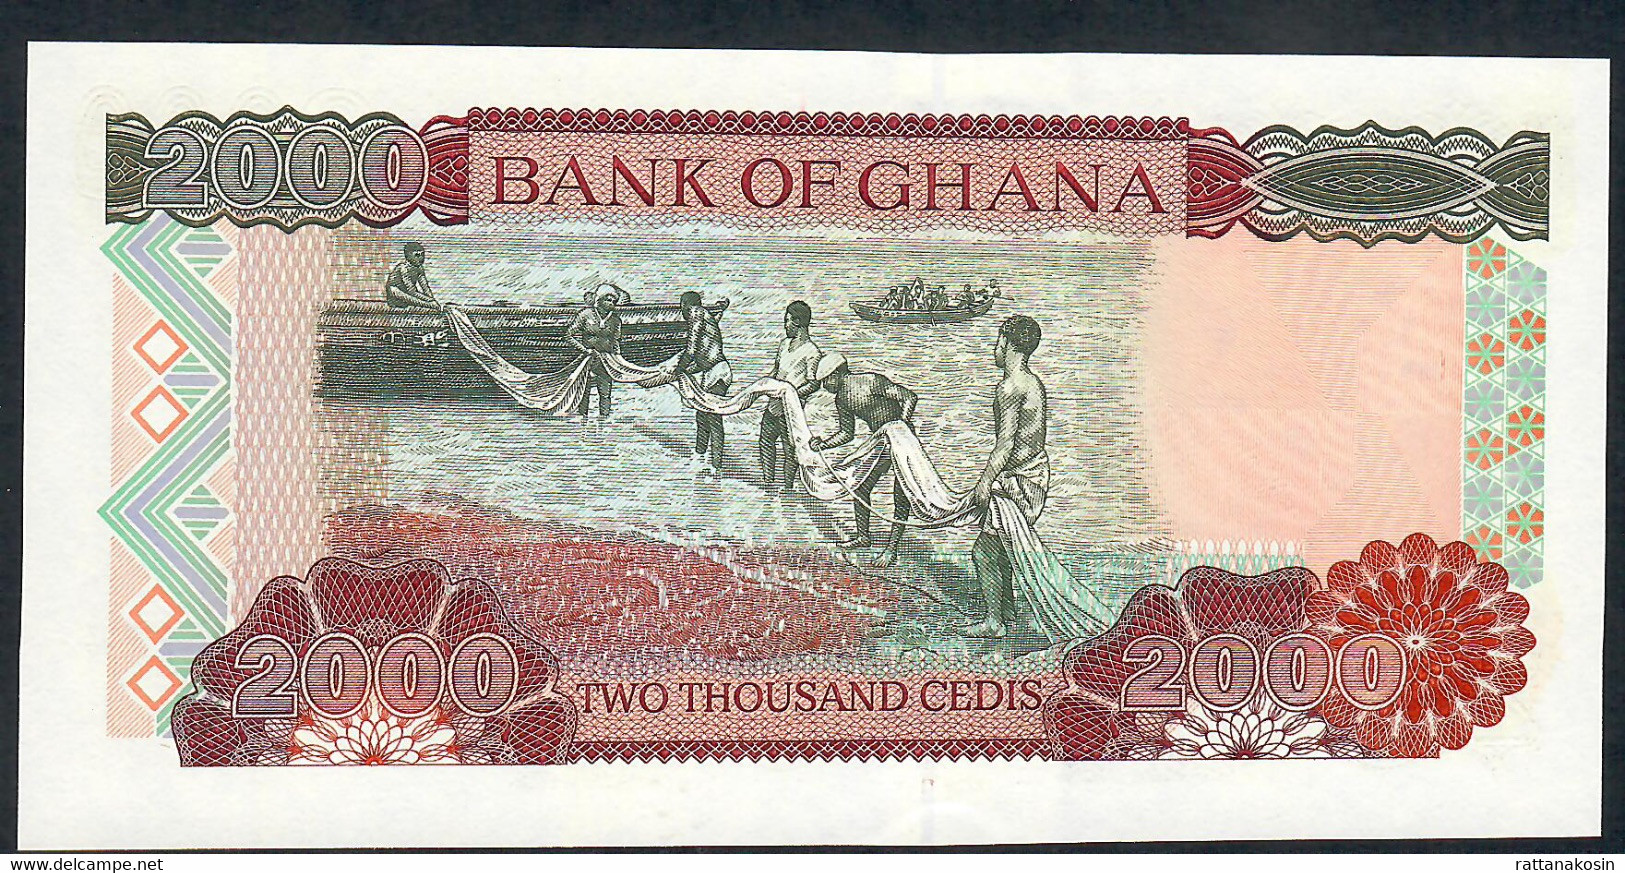 GHANA  P33a 2000 CEDIS 5.12.1996 FIRST DATE SERIE #AA001  UNC. - Ghana